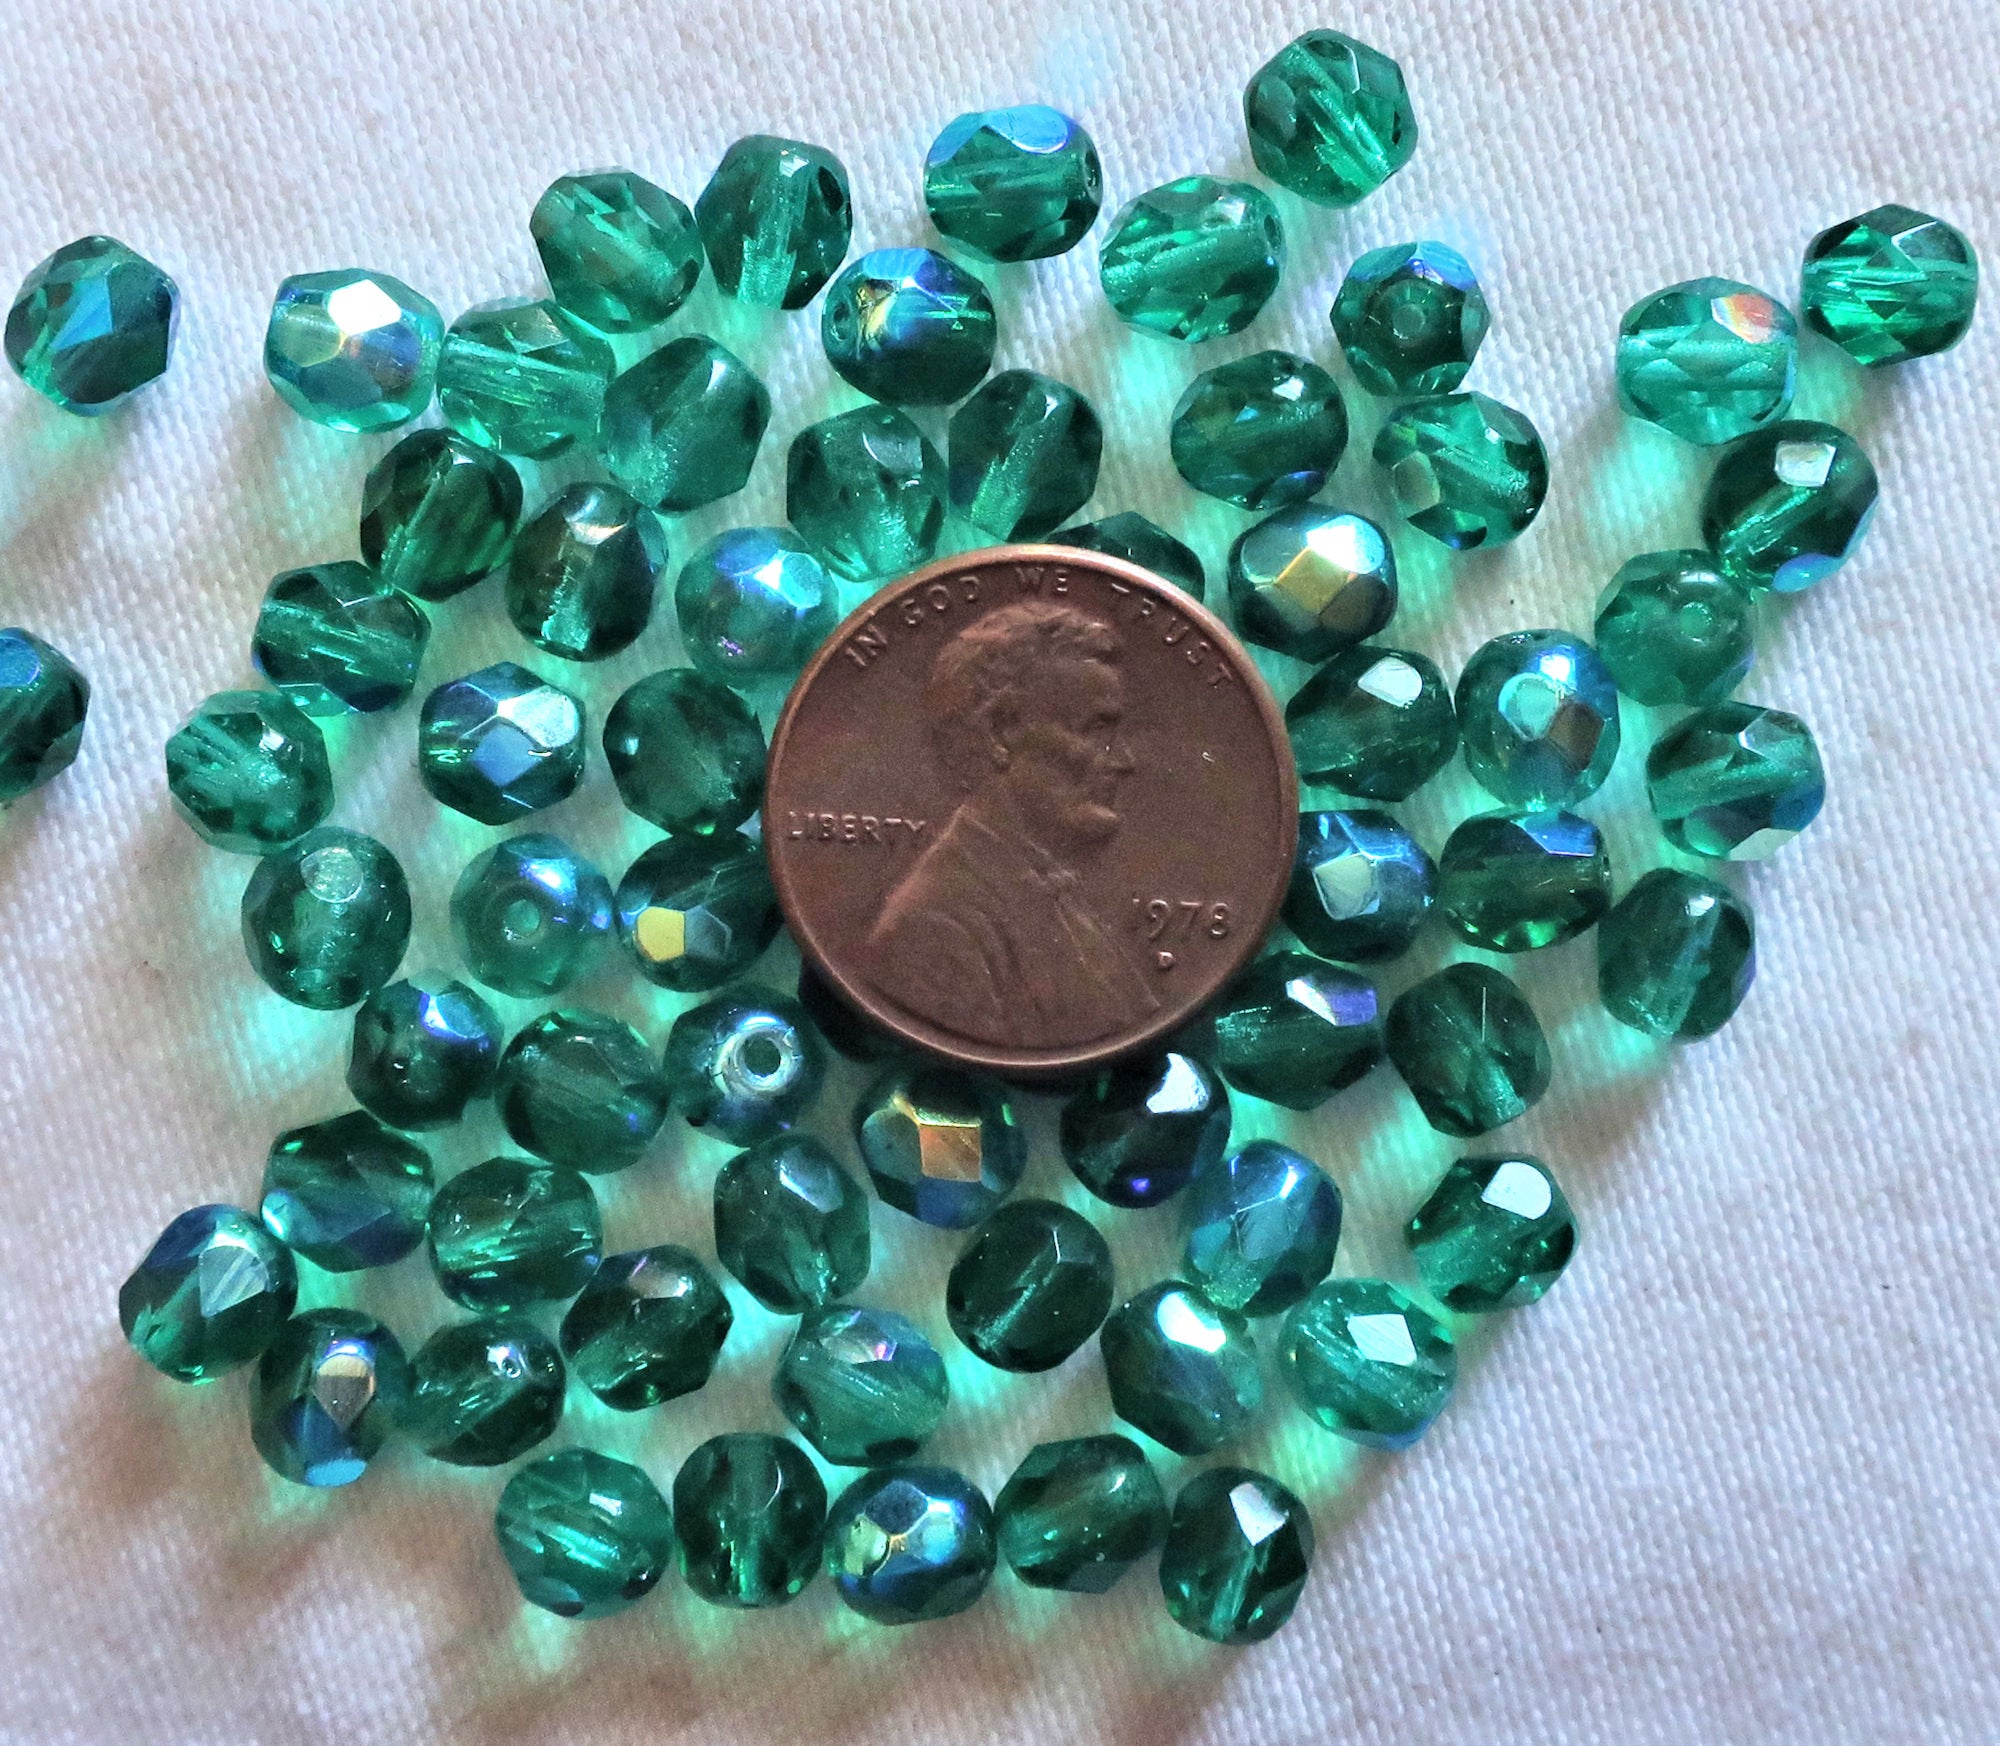 25/50pcs Sea Beach Glass Beads Mixed Colors Bulk Blue Green